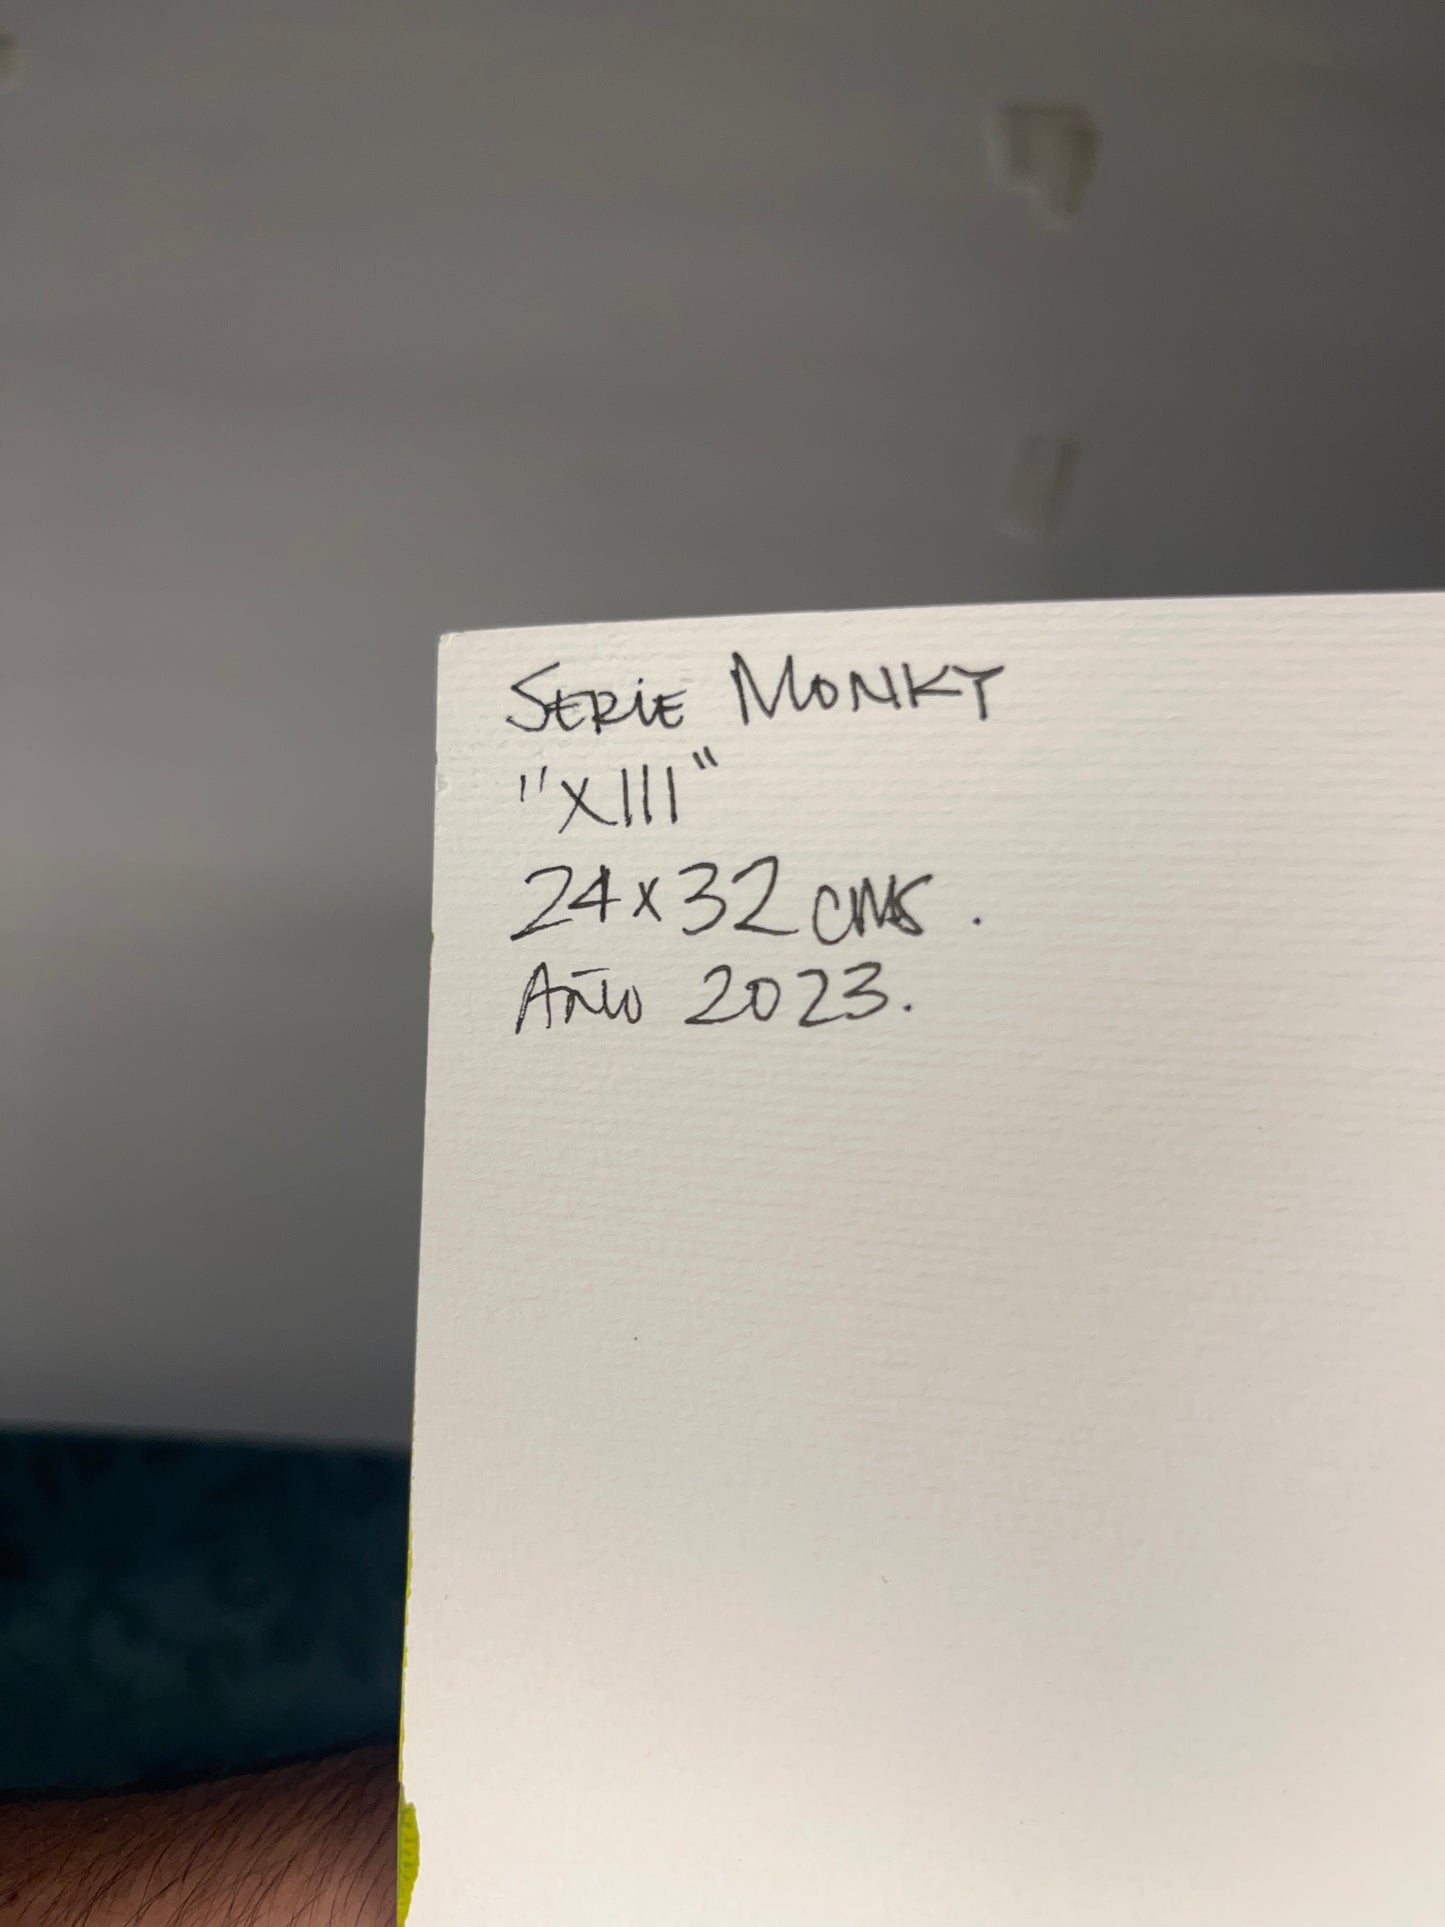 Serie Monky: "XIII" 24 x 32 cms / 9.5 x 12.6 In - 2023